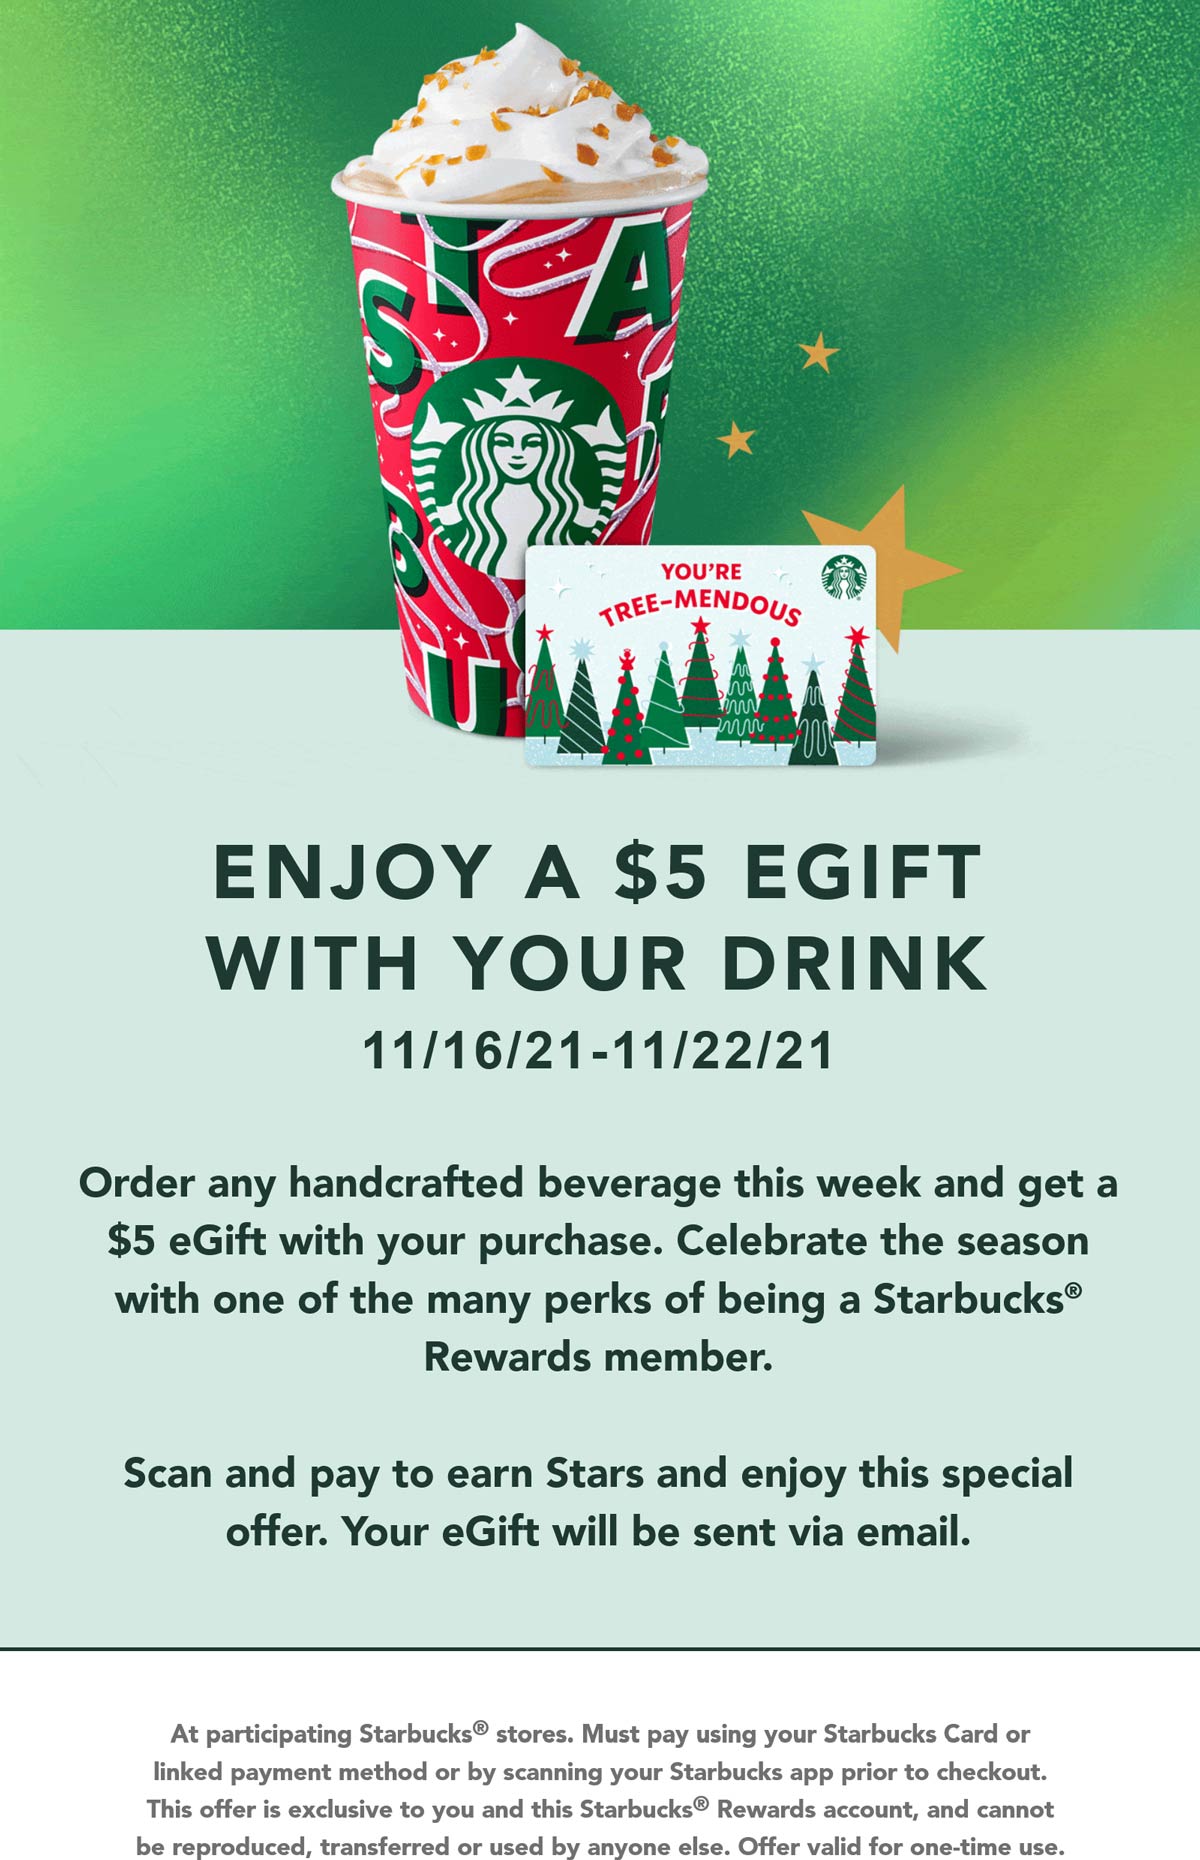 Starbucks restaurants Coupon  Free $5 egift with your drink today at Starbucks coffee #starbucks 